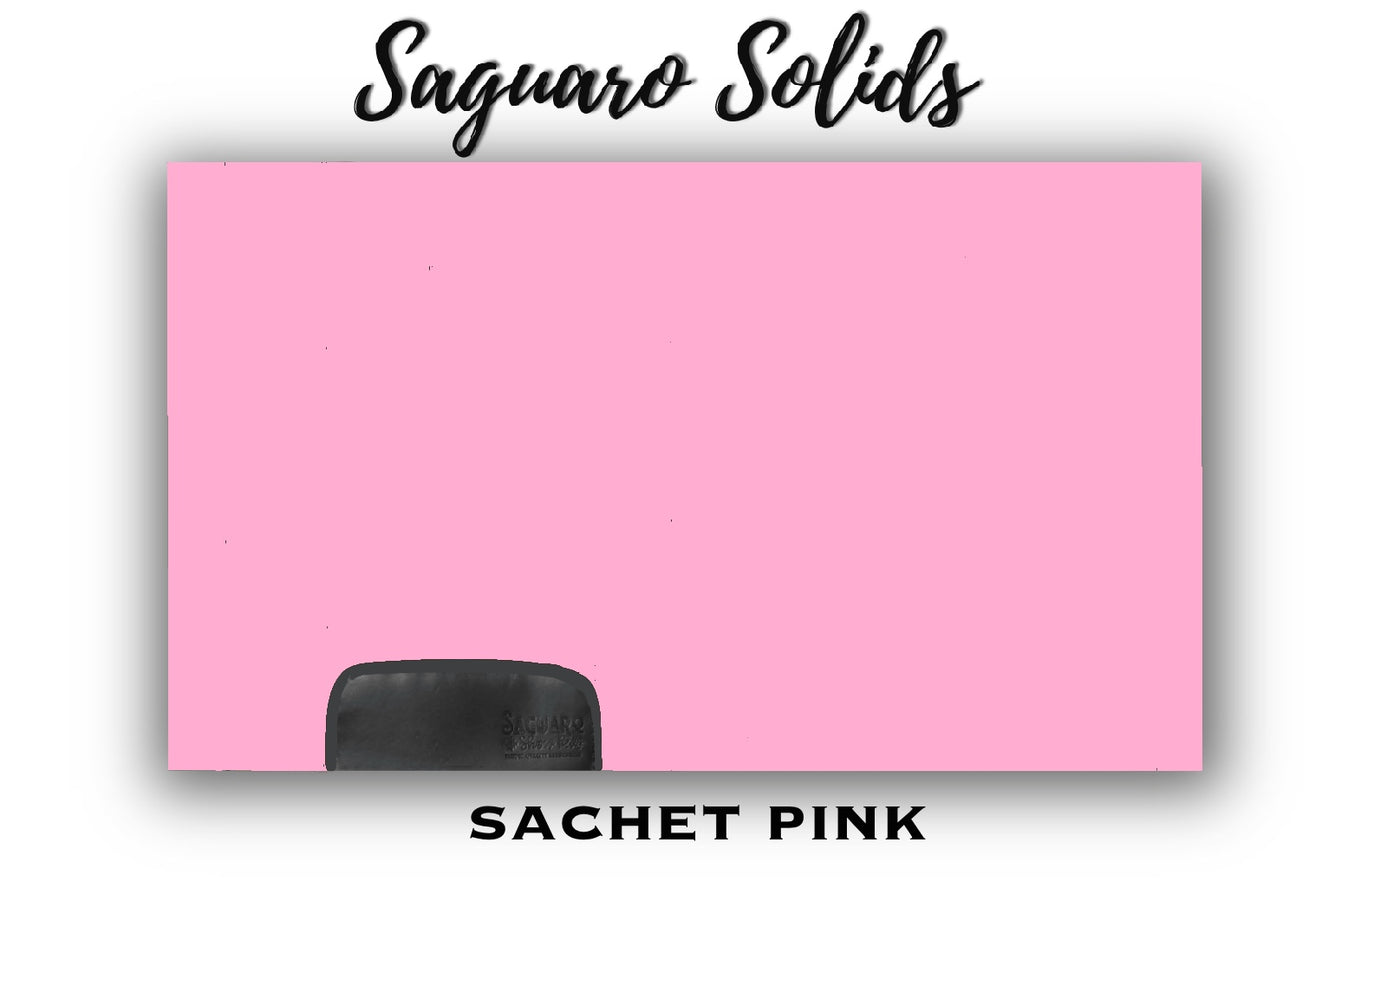 Saguaro Solid "Sachet Pink" Show Pad (SEMI-CUSTOM)